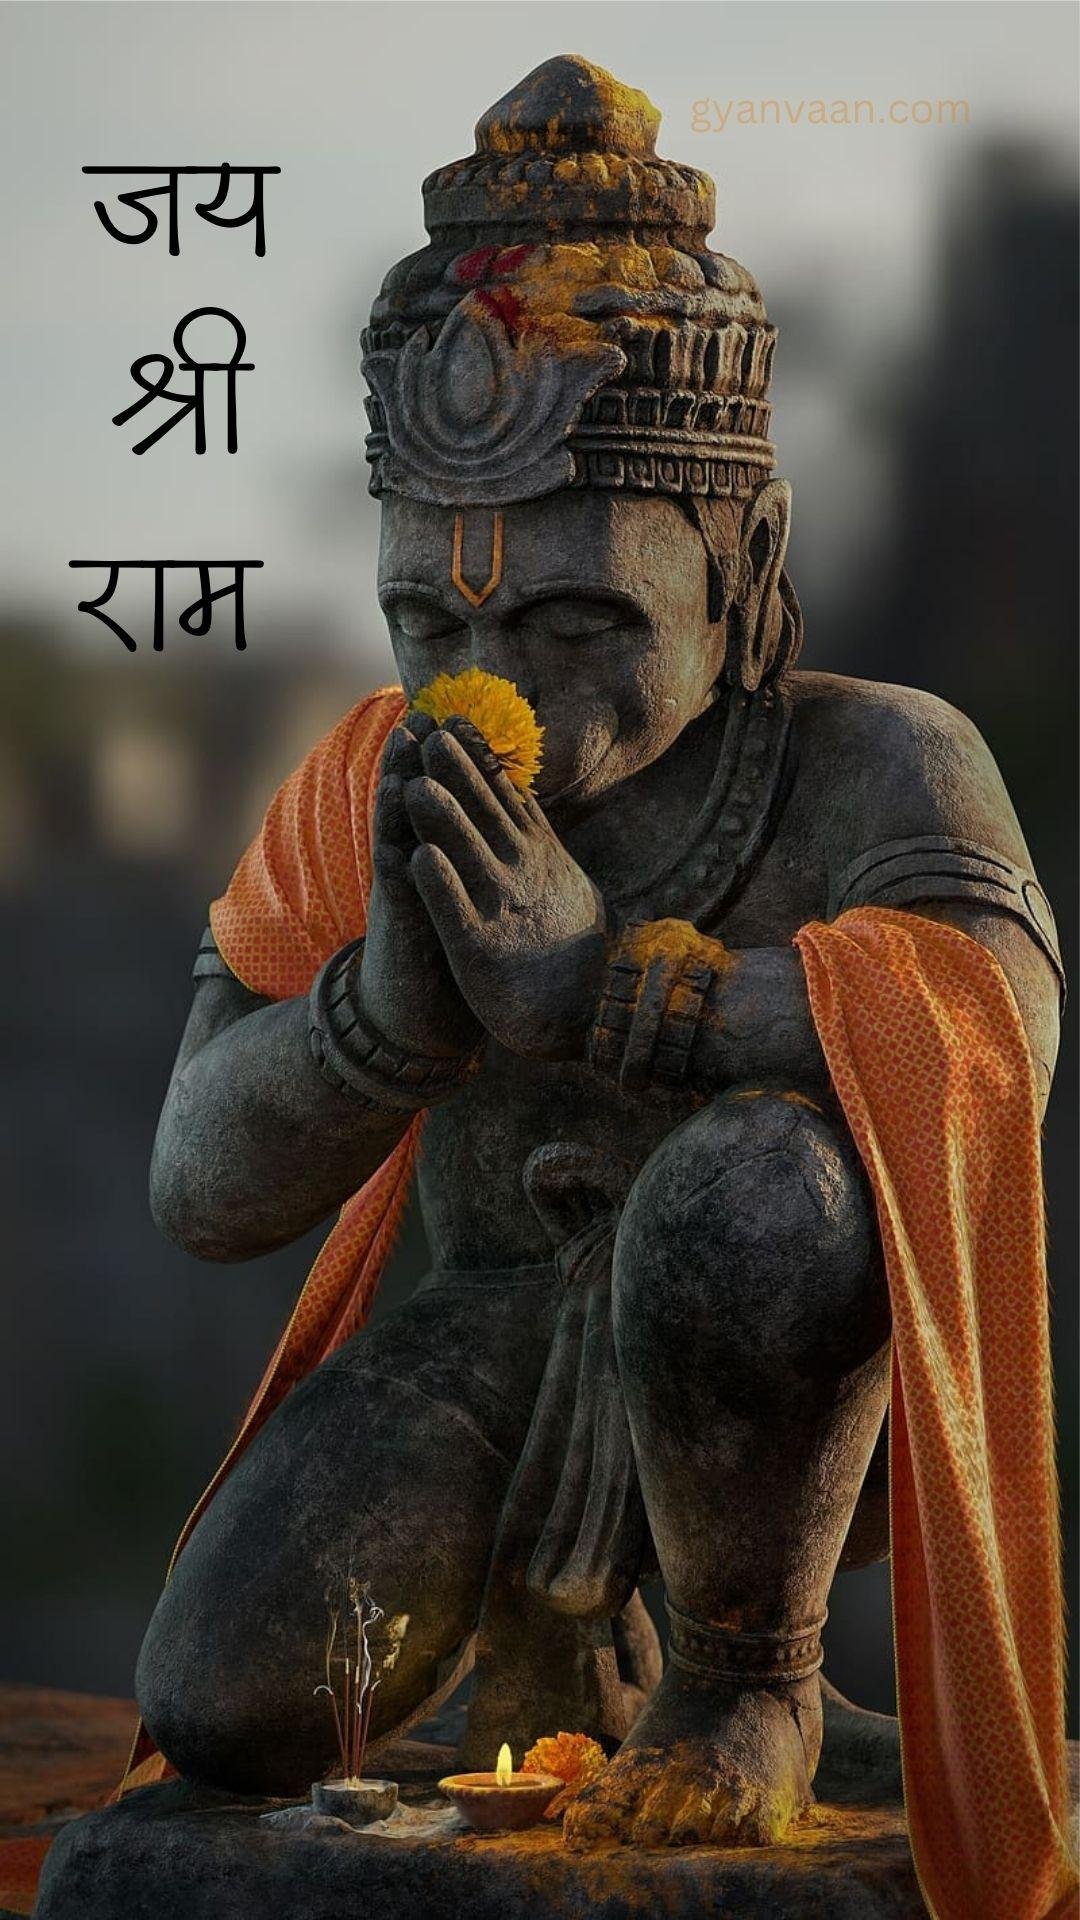 Hanuman Quotes Shayari And Whatsapp Status For Mobile With Hanuman Images And Photos 53 - Hanuman Images